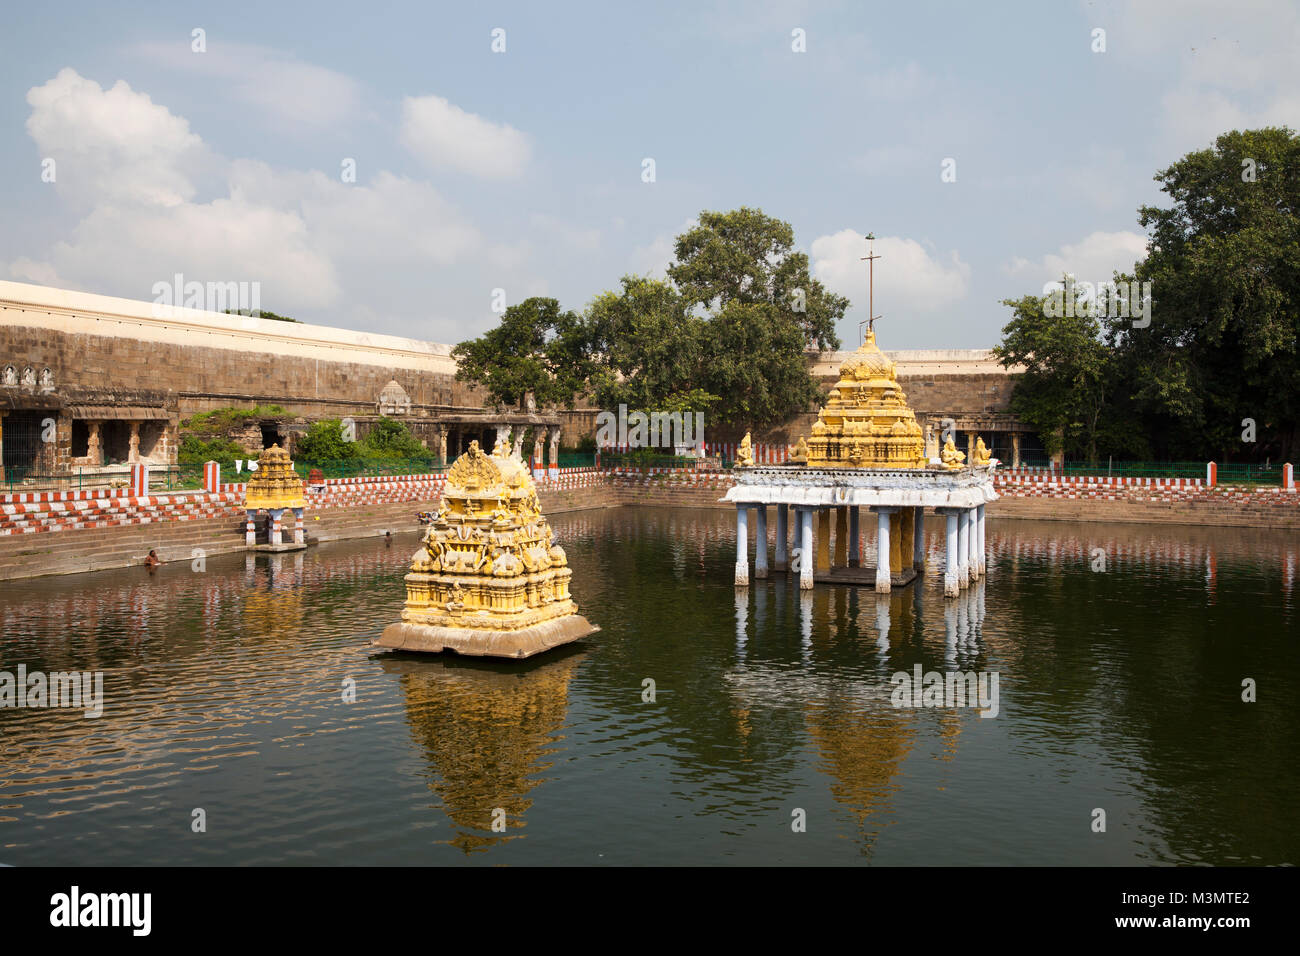 L'Inde, le Tamil Nadu, Kanchipuram, Temple Varadharaja Perumal Banque D'Images